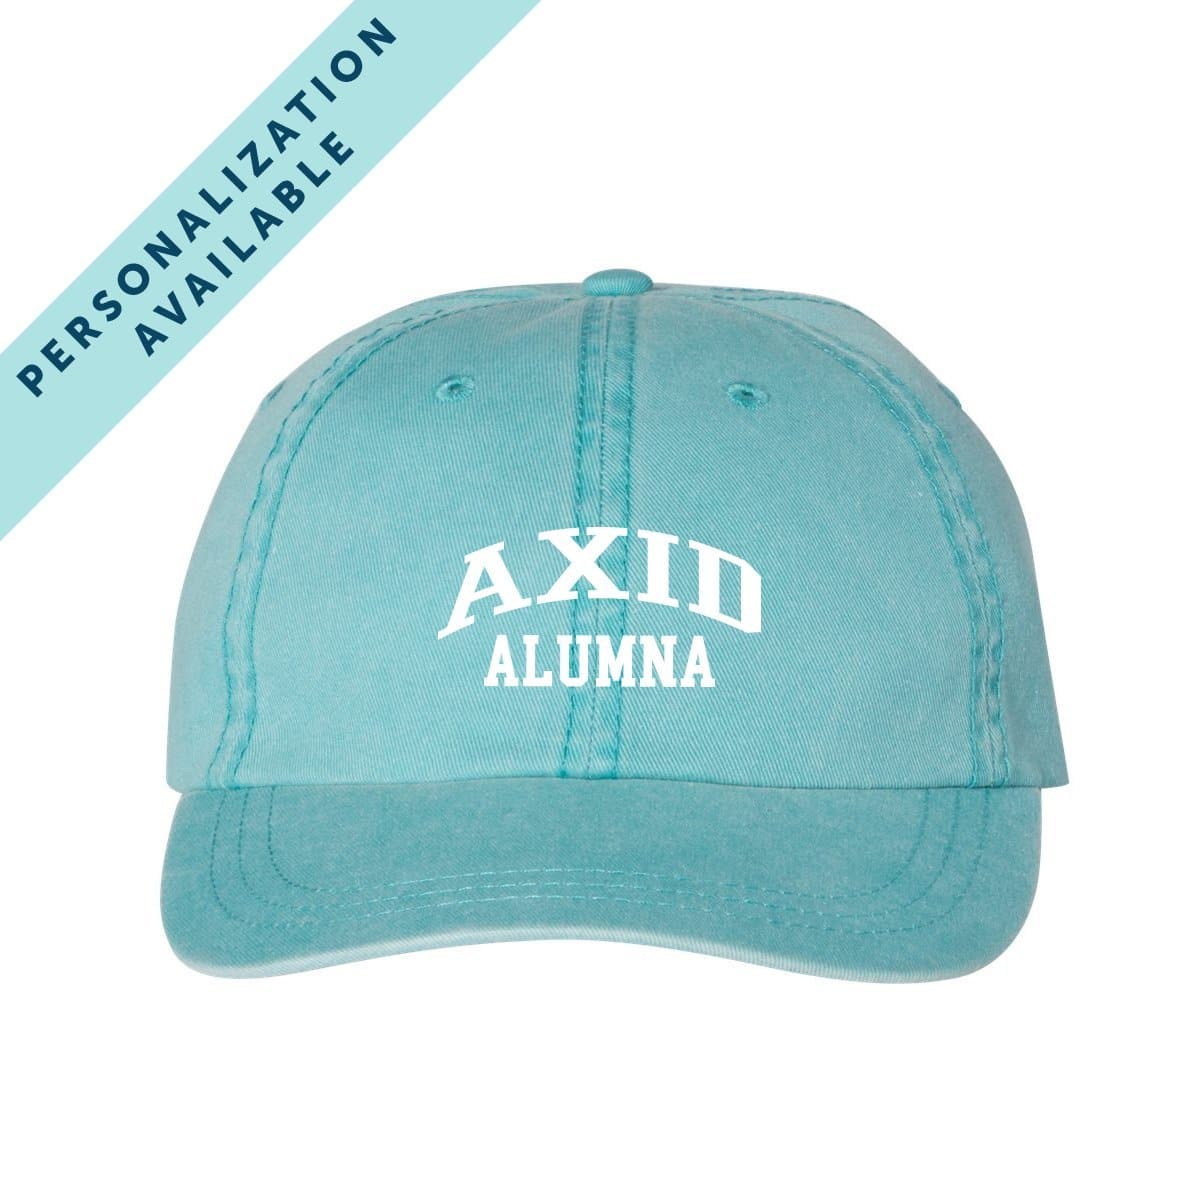 AXiD Alumna Cap | Alpha Xi Delta | Headwear > Billed hats